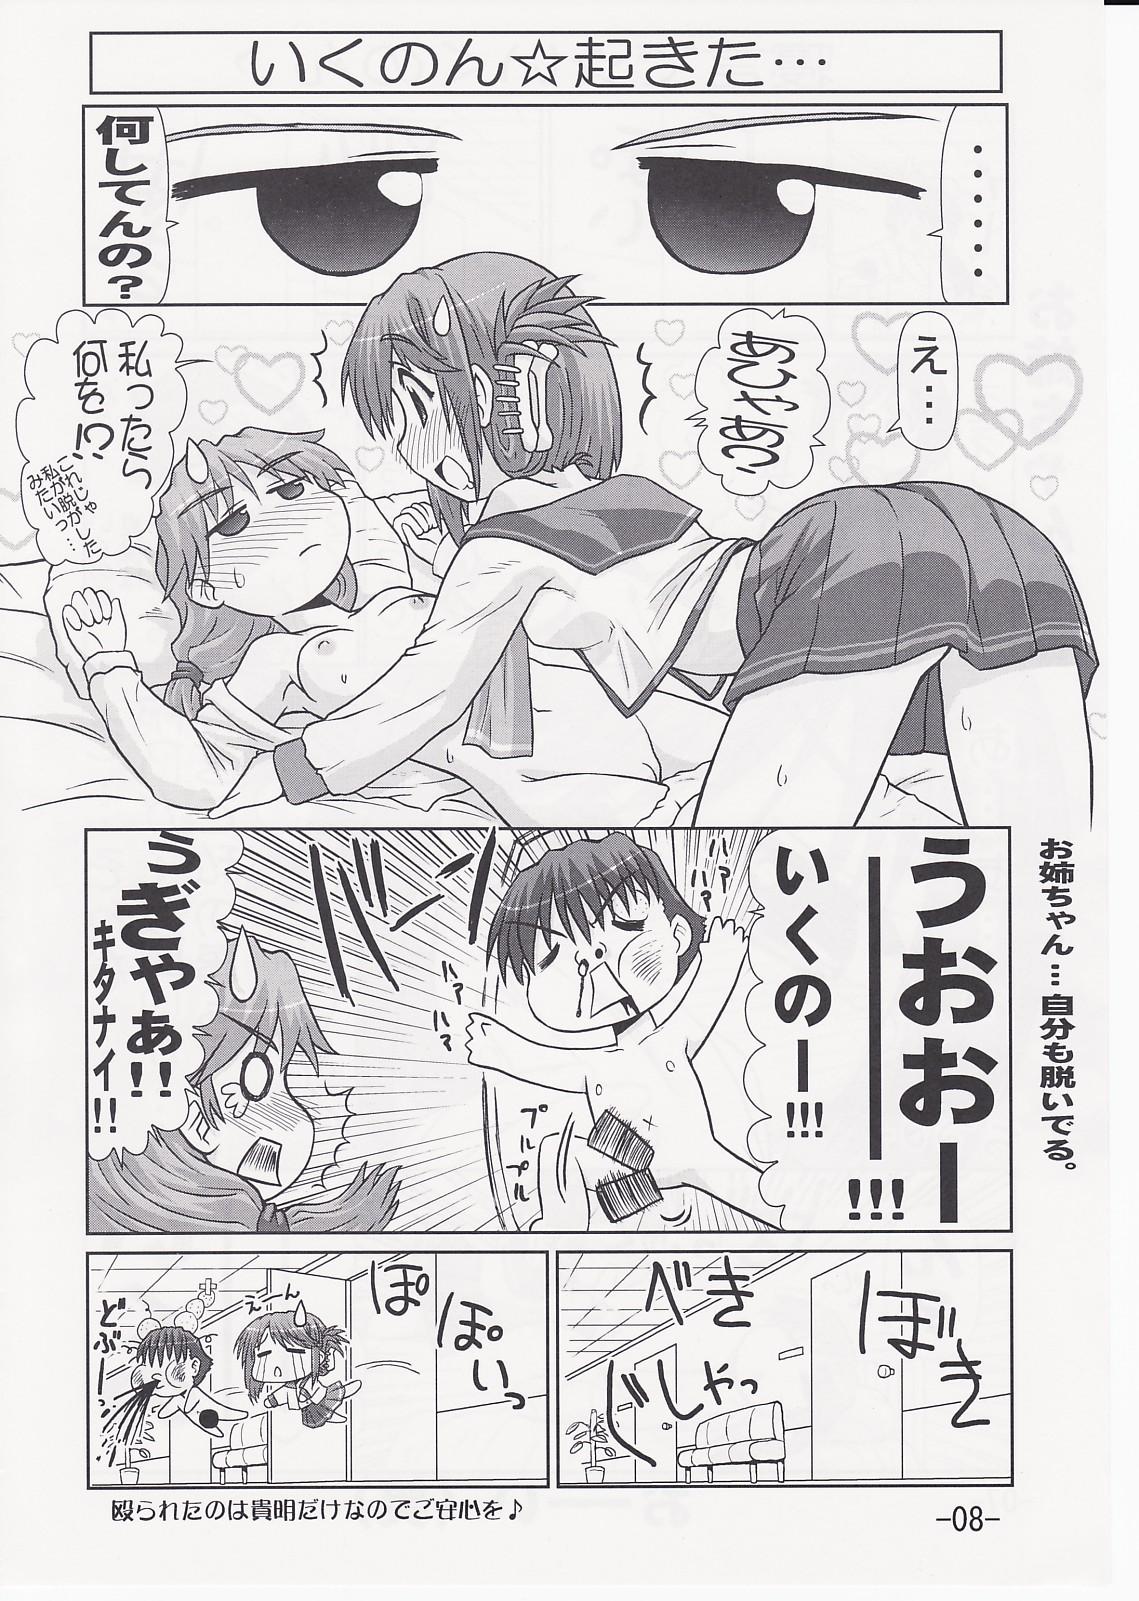 Juicy Ikunon Manga 2 - Toheart2 Couples Fucking - Page 7